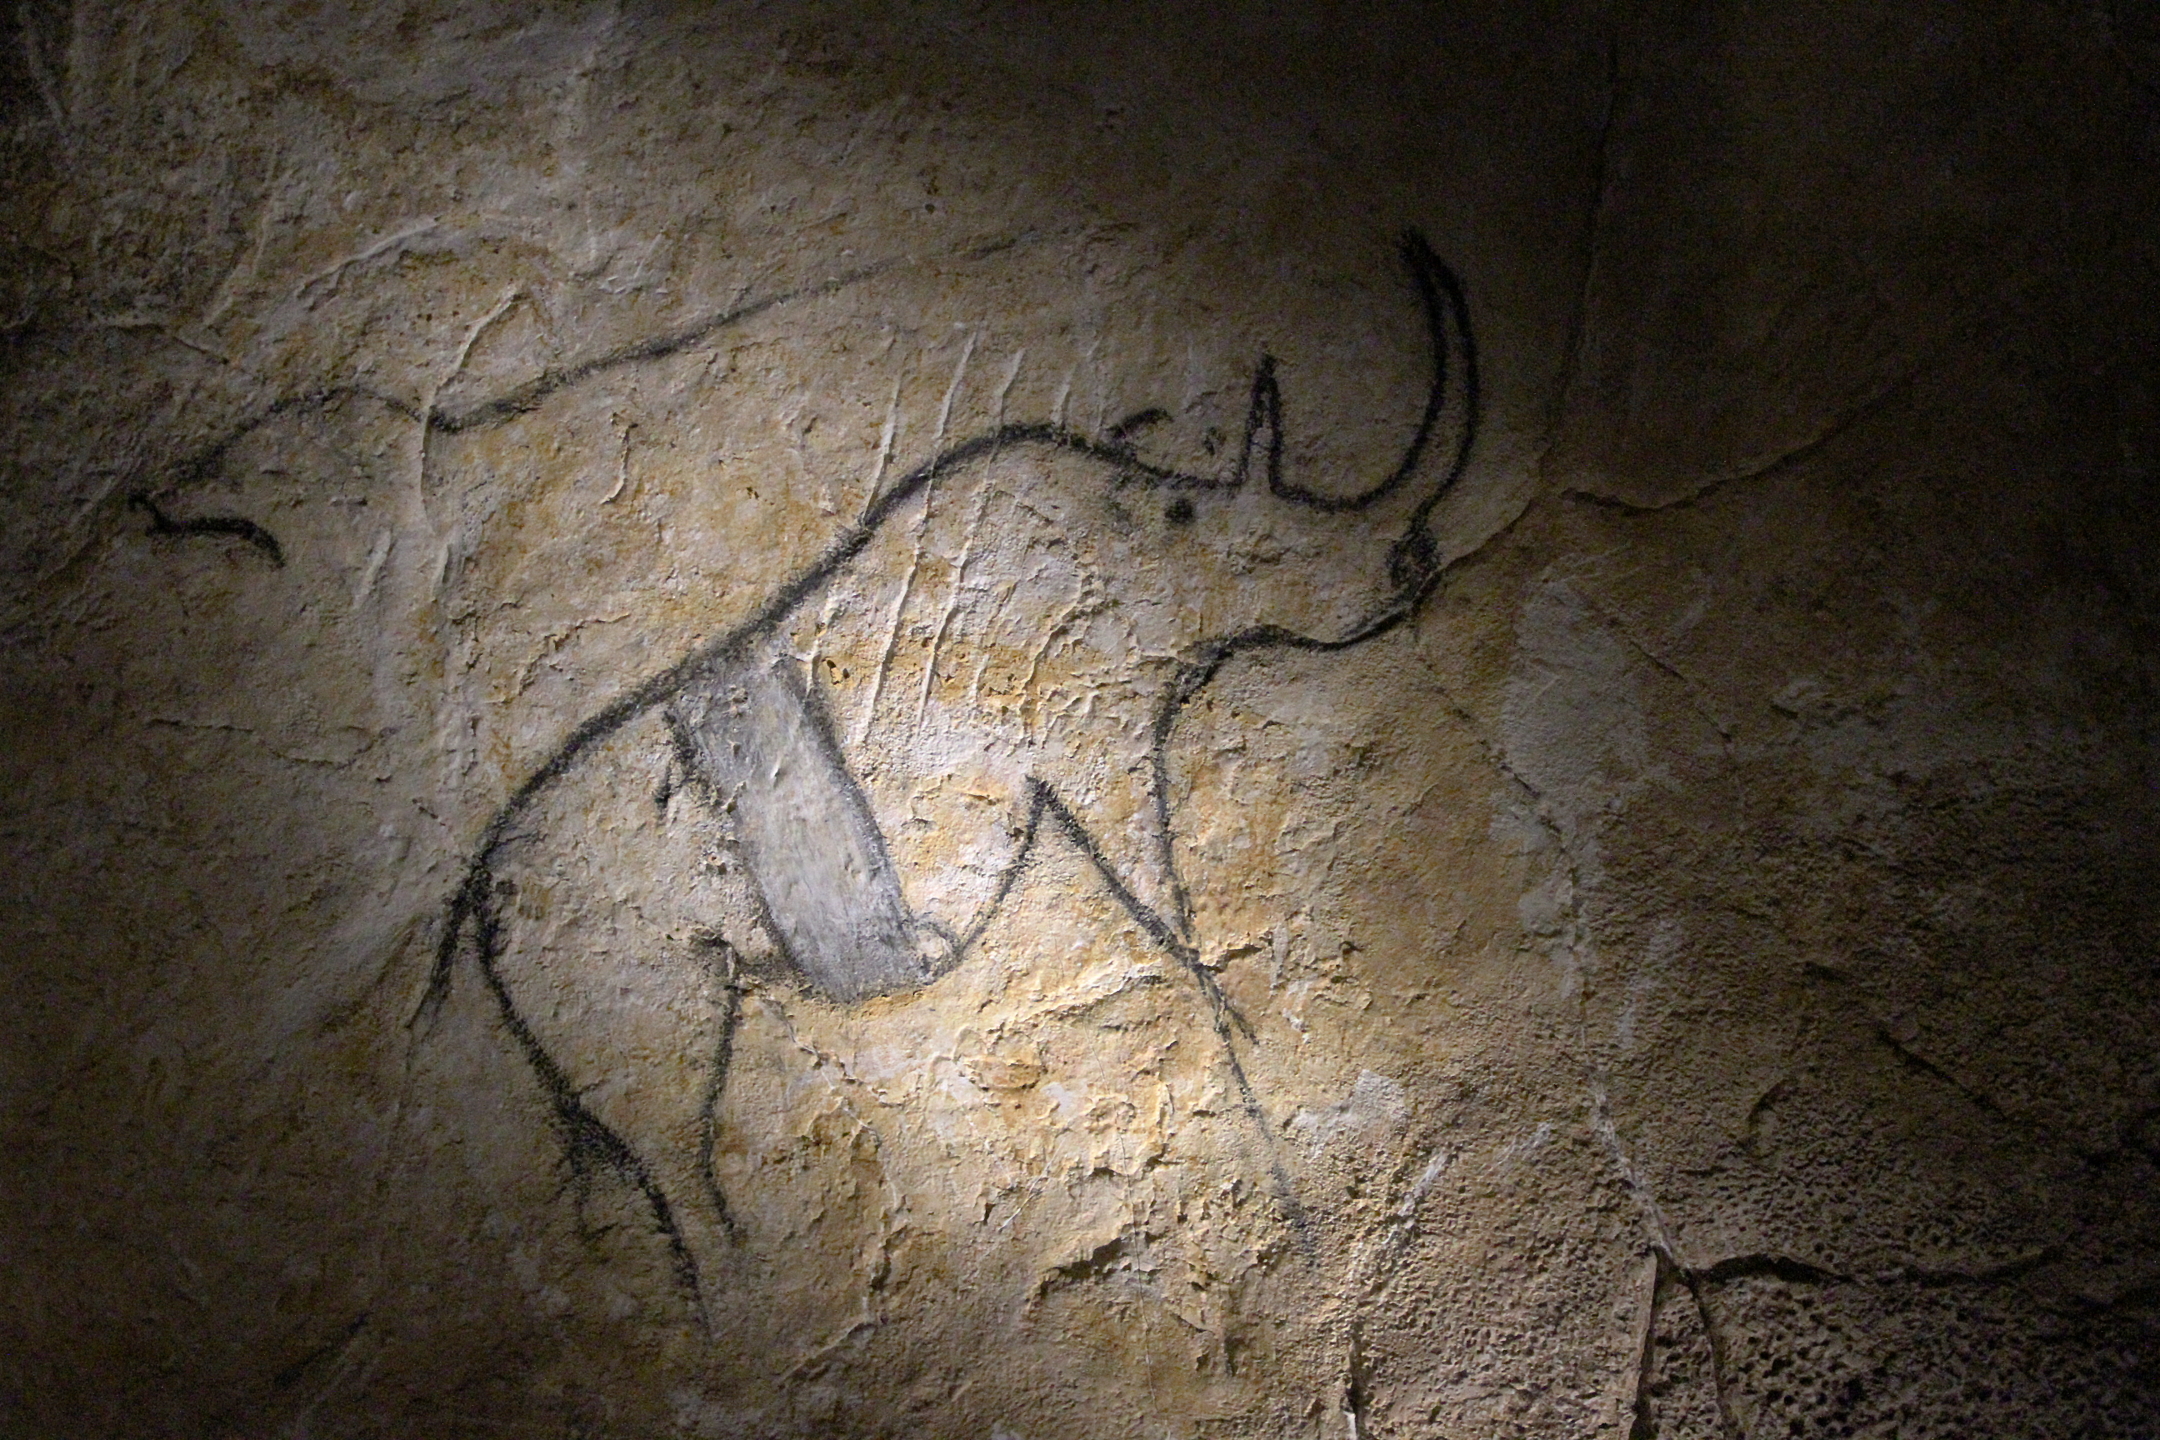 Chauvet Cave (Detail of Rhinoceros), (Ardèdeche, France). Photo by Claude Valette, CC BY-ND 2.0.